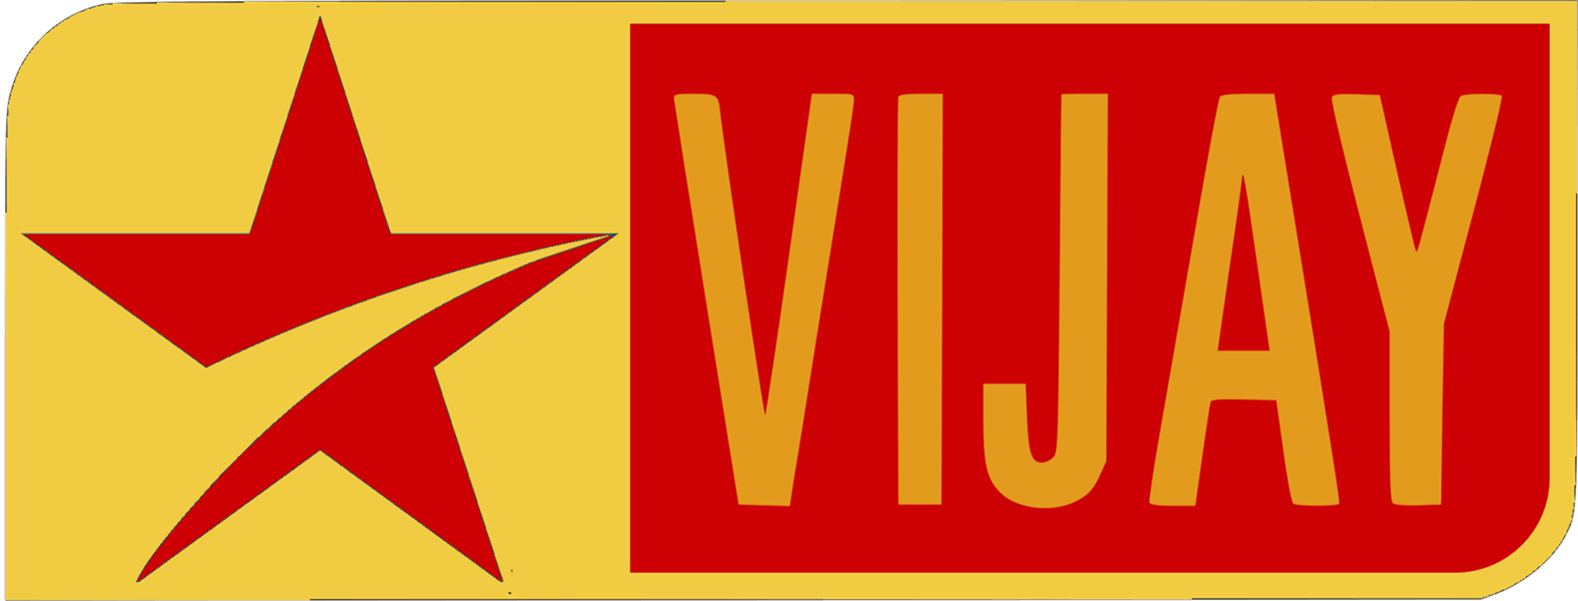 Old TV Logo - Vijay TV Old LOGO.png